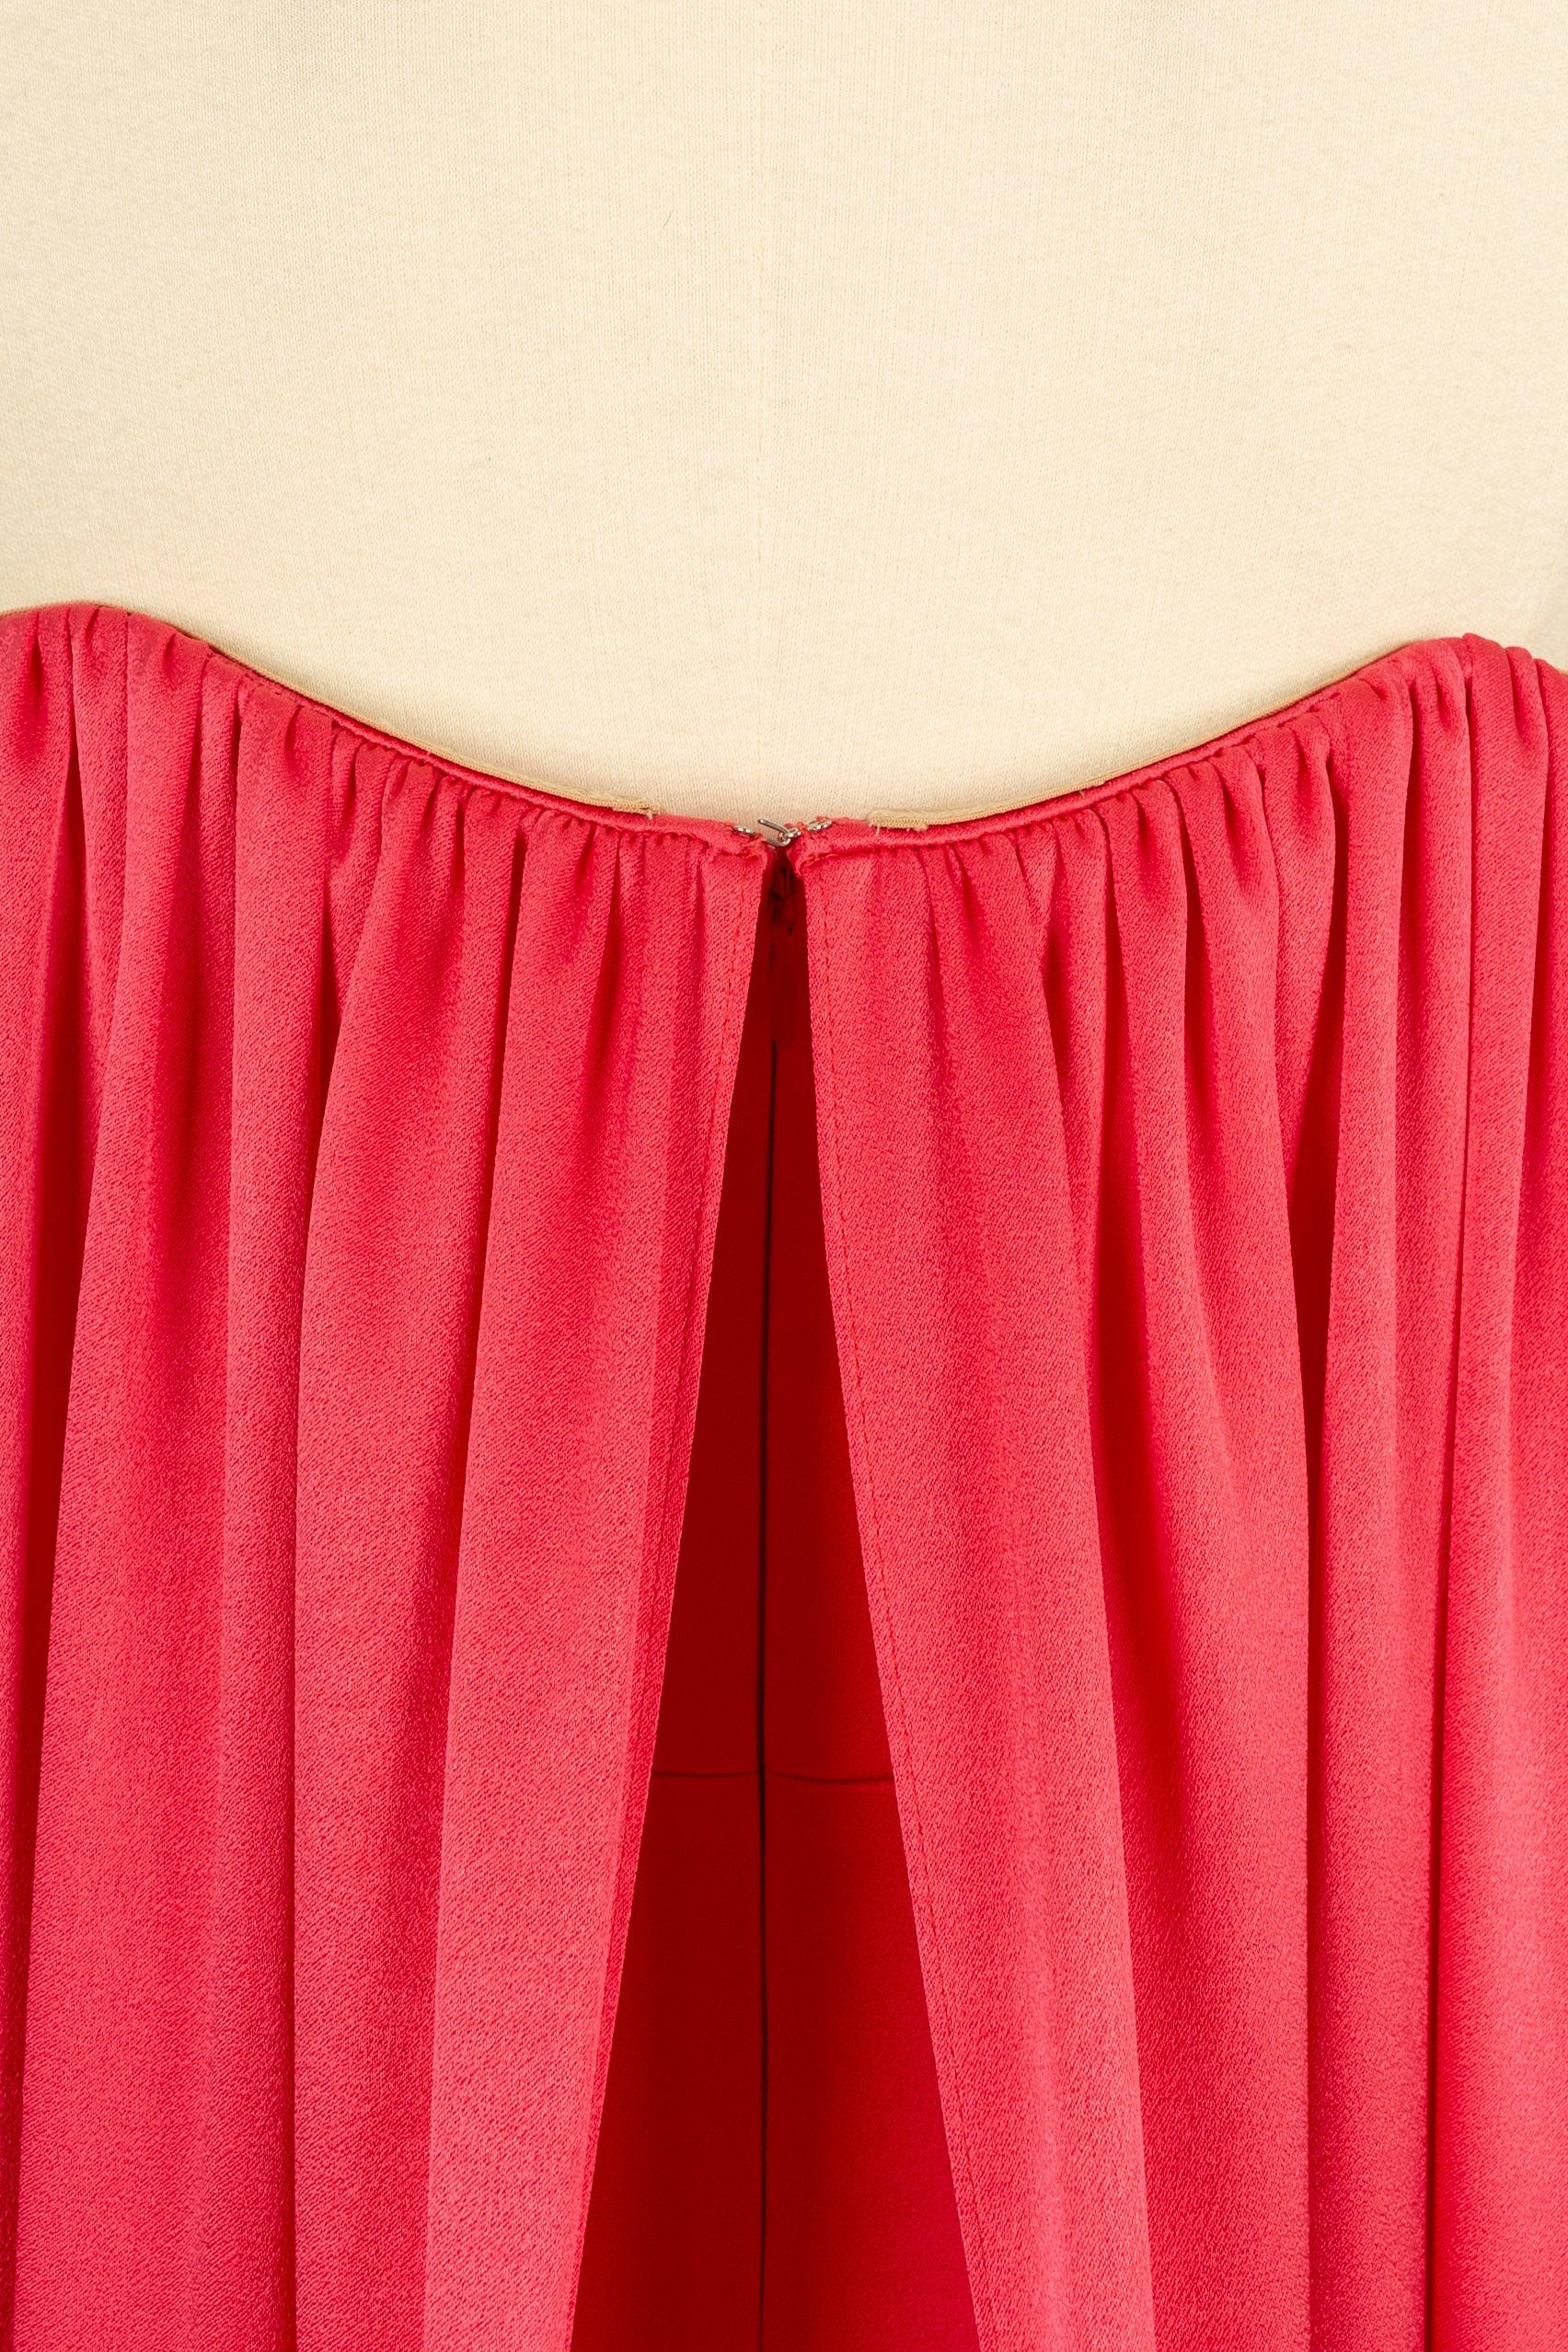 Paule Ka Maxi Long Dress in Pink Duchess Satin, 2022 For Sale 3